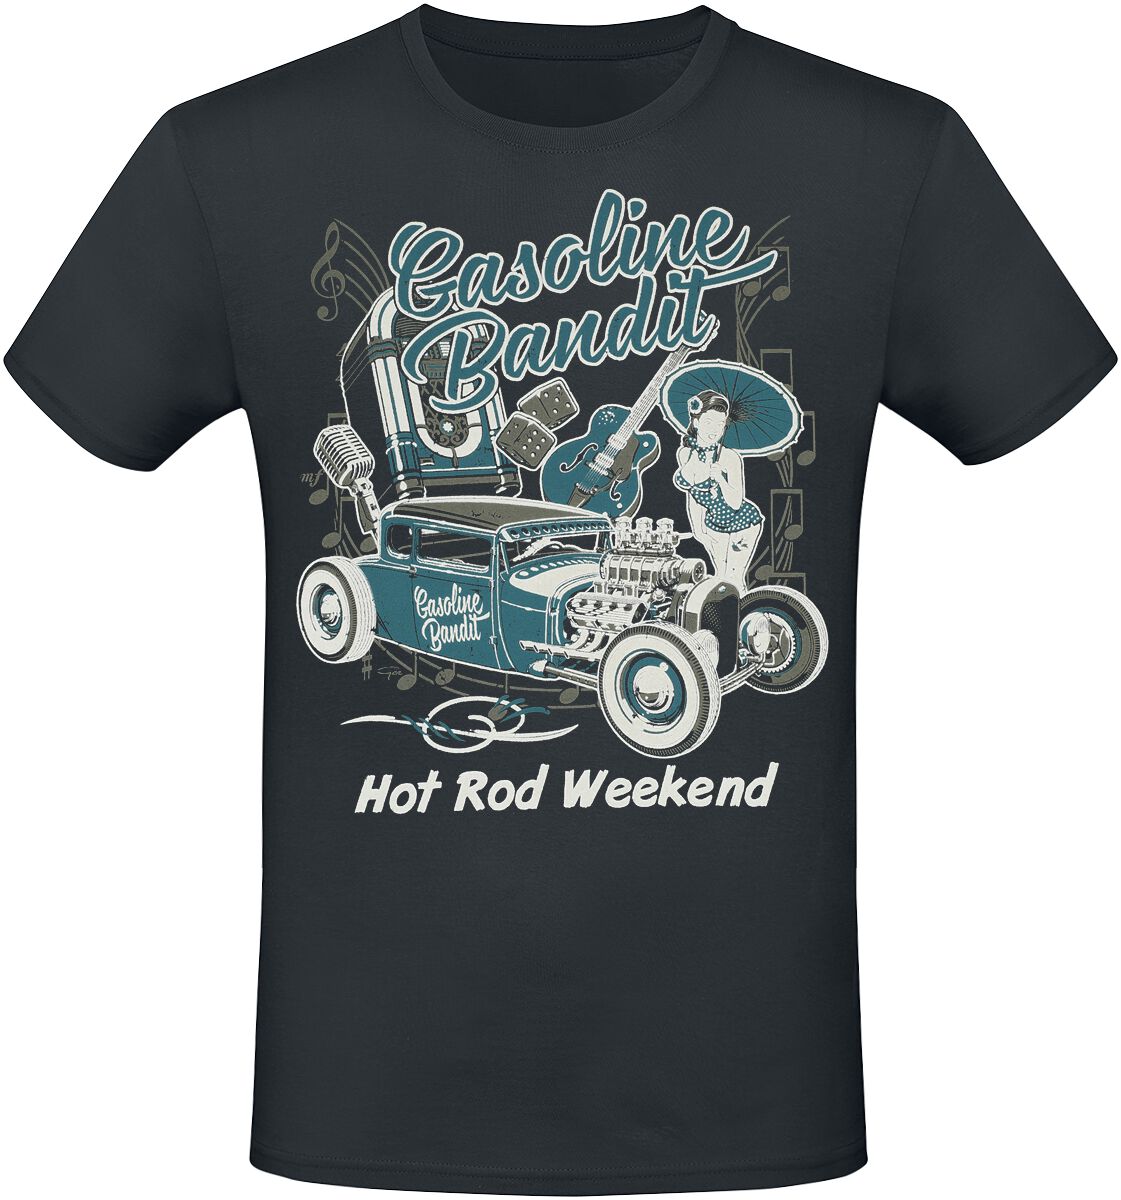 Image of T-Shirt Rockabilly di Gasoline Bandit - Hot Rod Weekend - S a 4XL - Uomo - nero